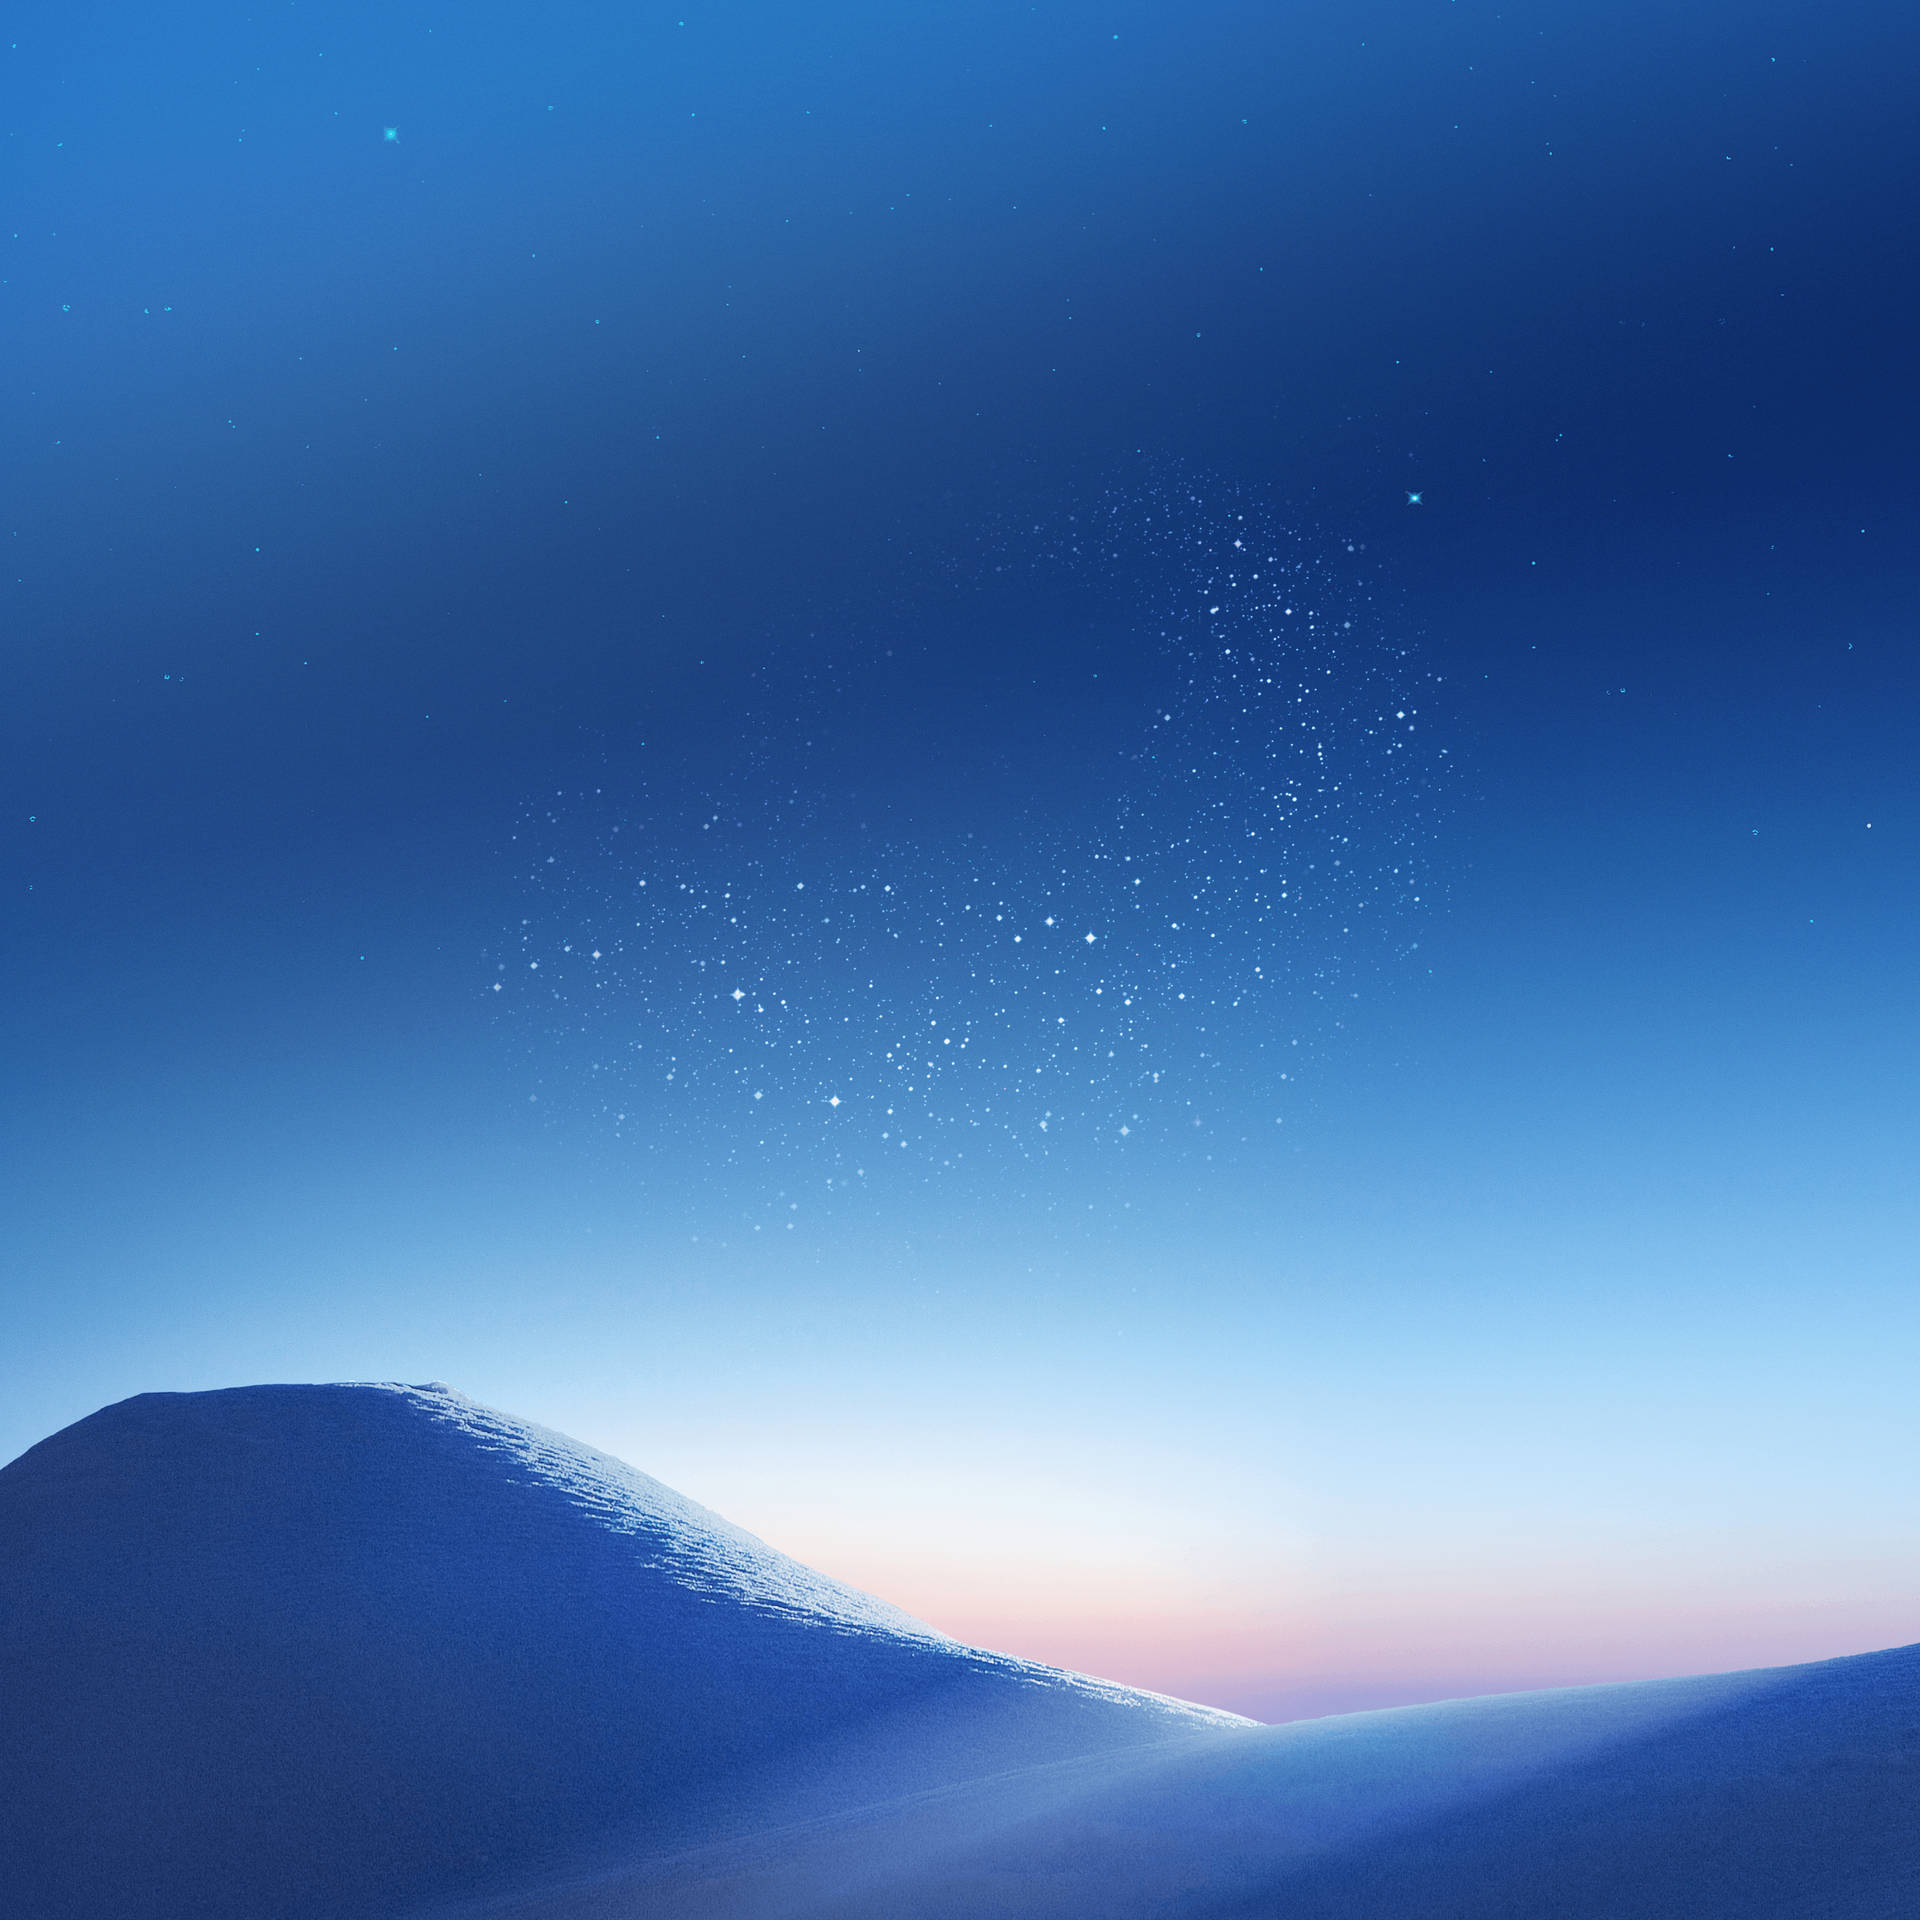 Qhd Snowy Mountain On A Soft Sky Background